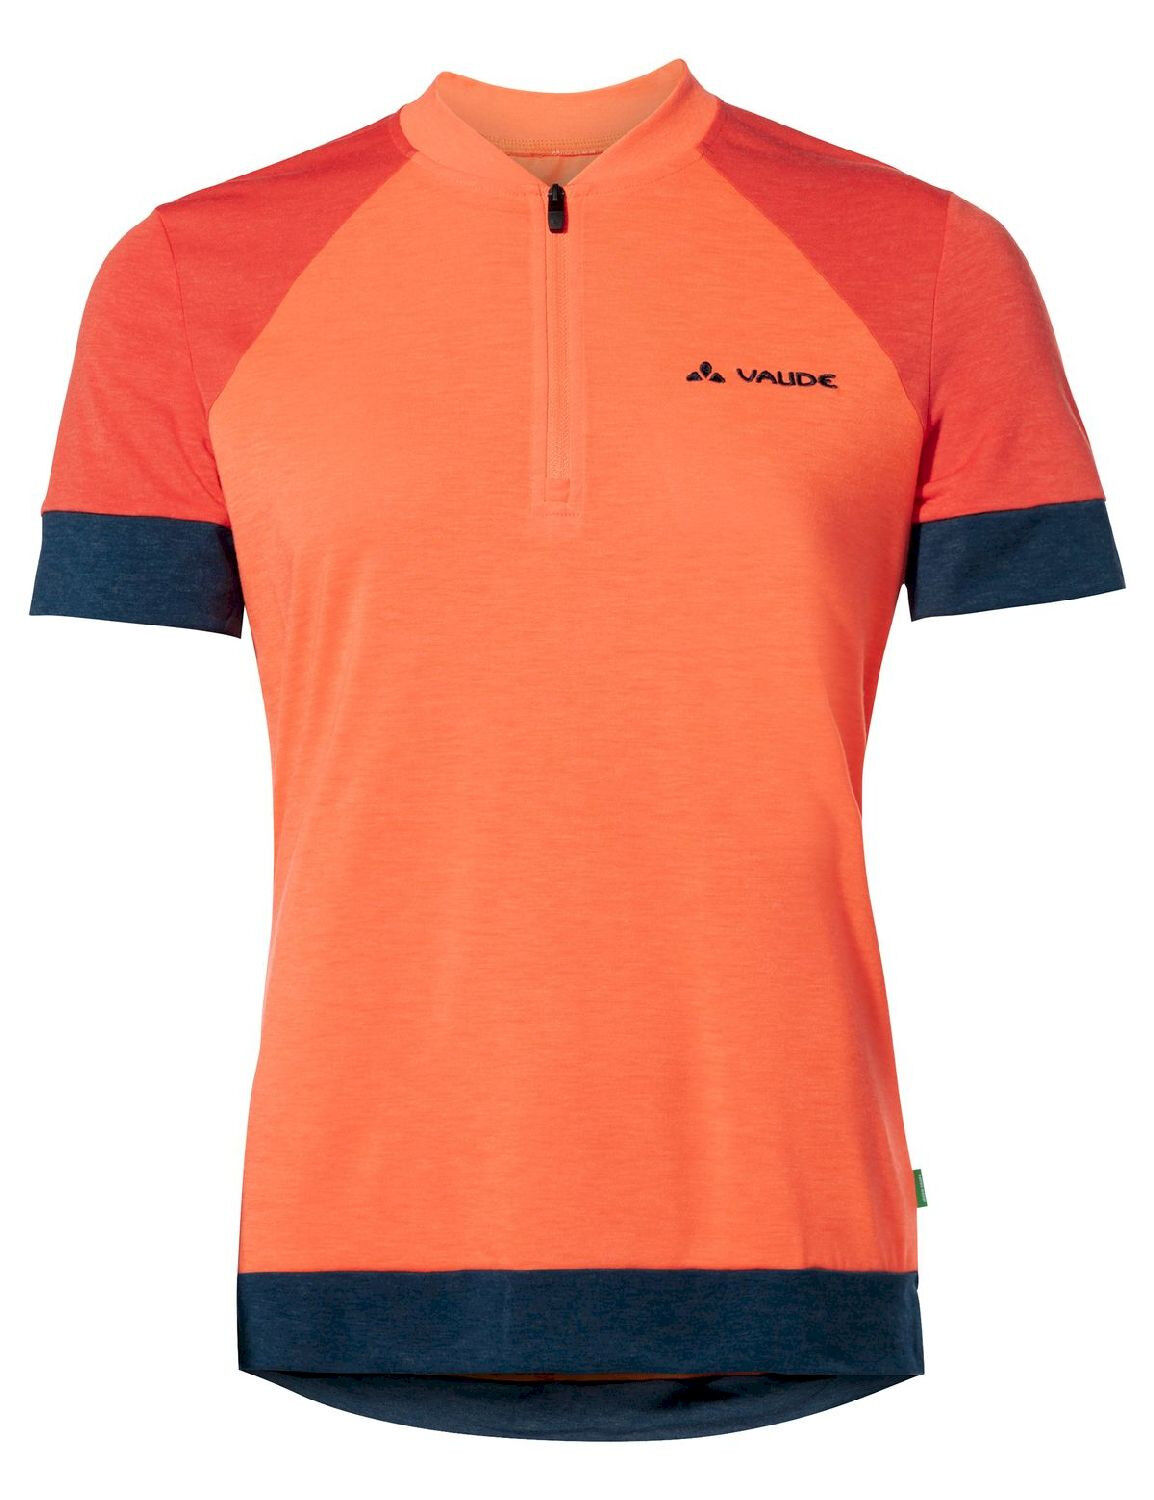 Vaude Altissimo Q-Zip Shirt - Cycling jersey - Women's